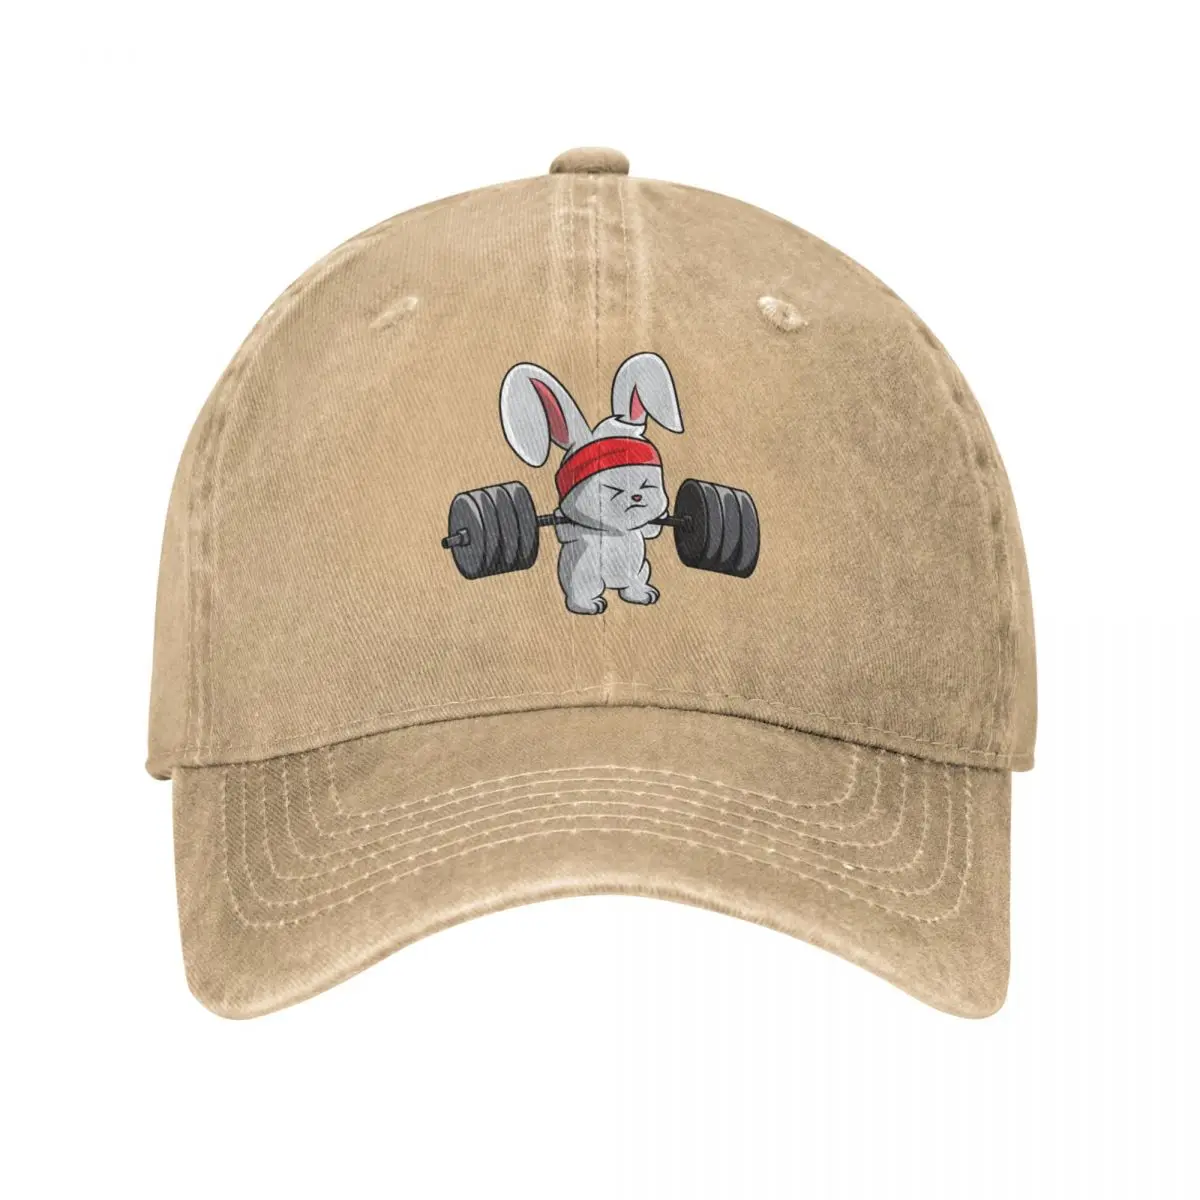 

Bunny Fitness Gym Workout Men Women Baseball Cap Distressed Denim Washed Hats Cap Fashion All Seasons Travel Snapback Hat